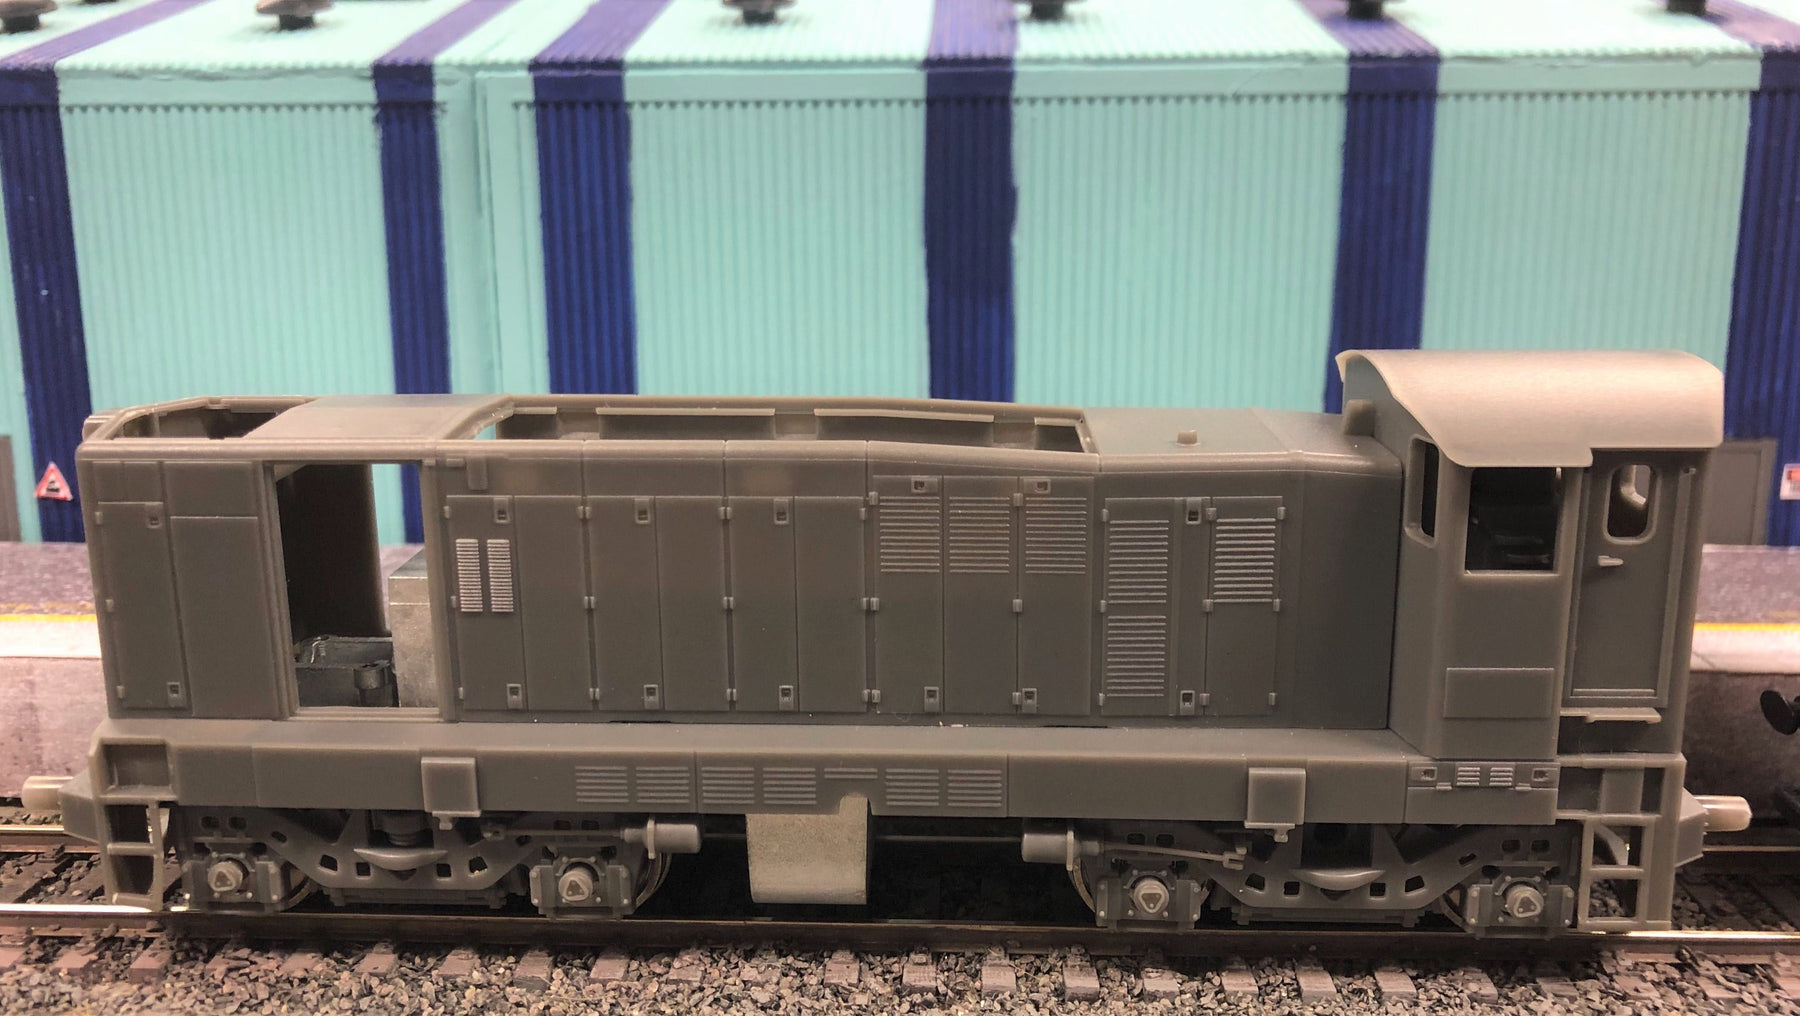 IRM To Stock Murphy Models 121 Class Locomotives!